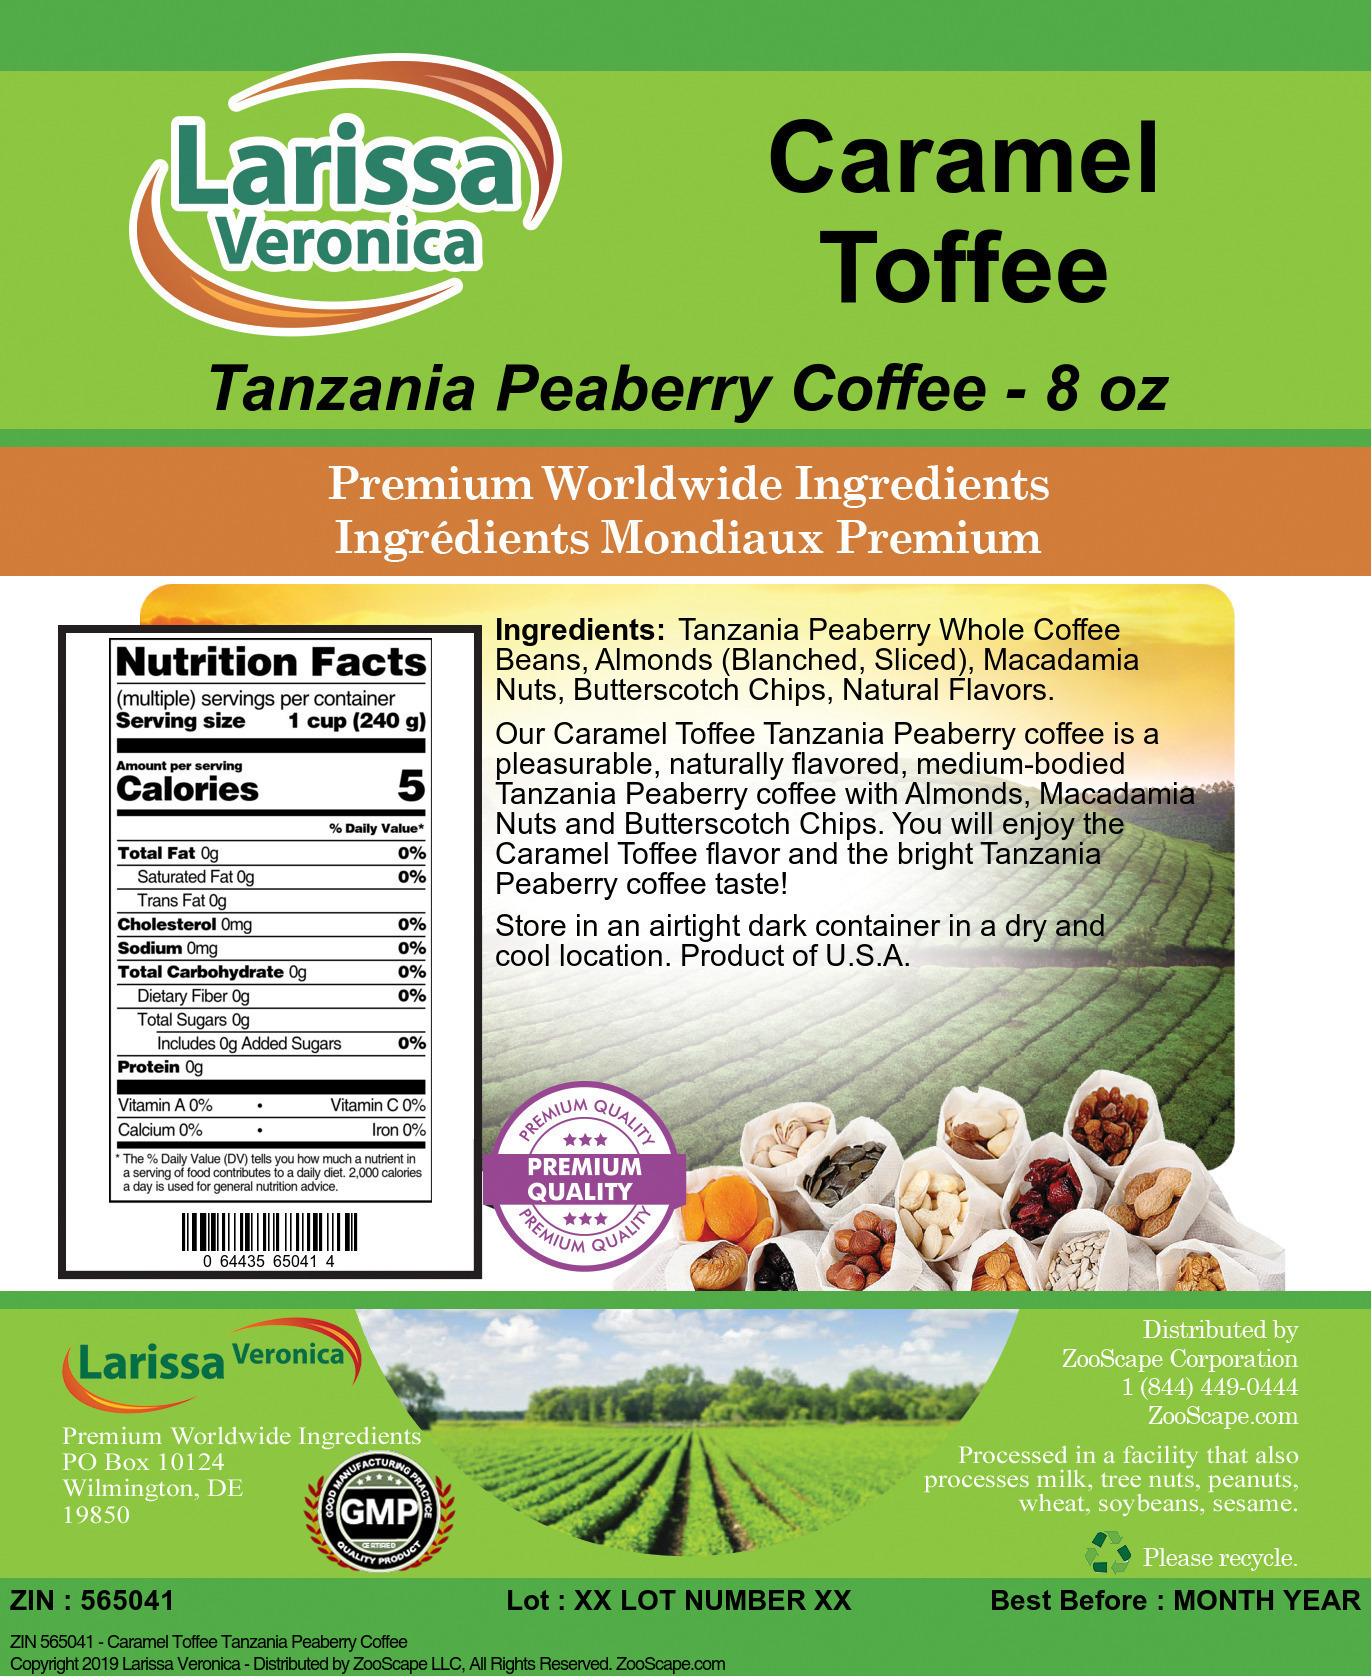 Caramel Toffee Tanzania Peaberry Coffee - Label